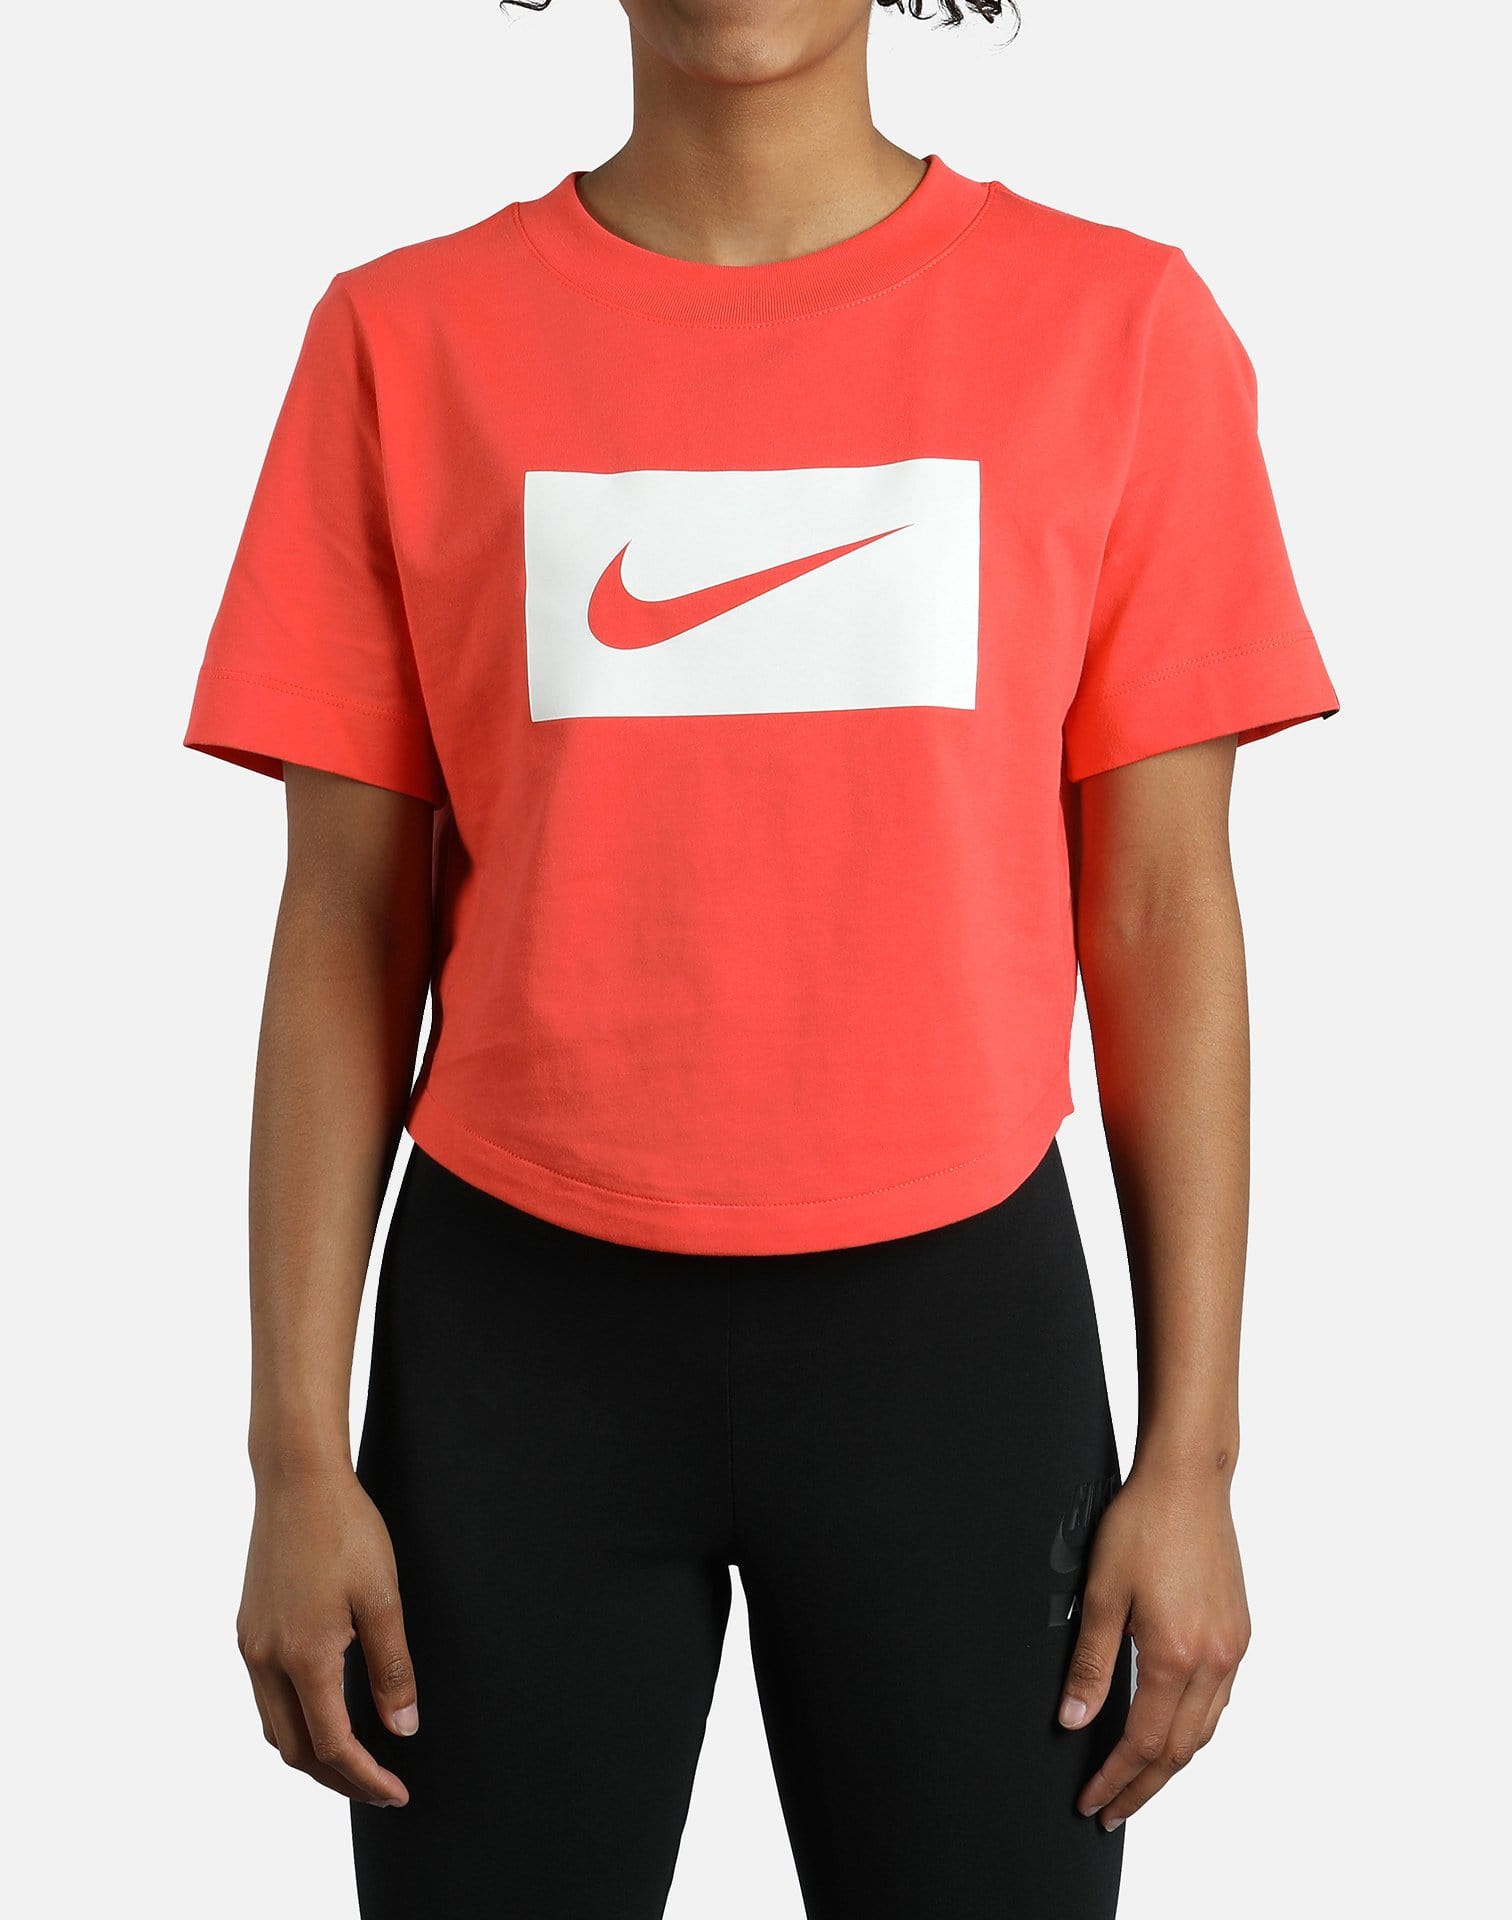 Nike NSW Women's Swoosh Crop Top